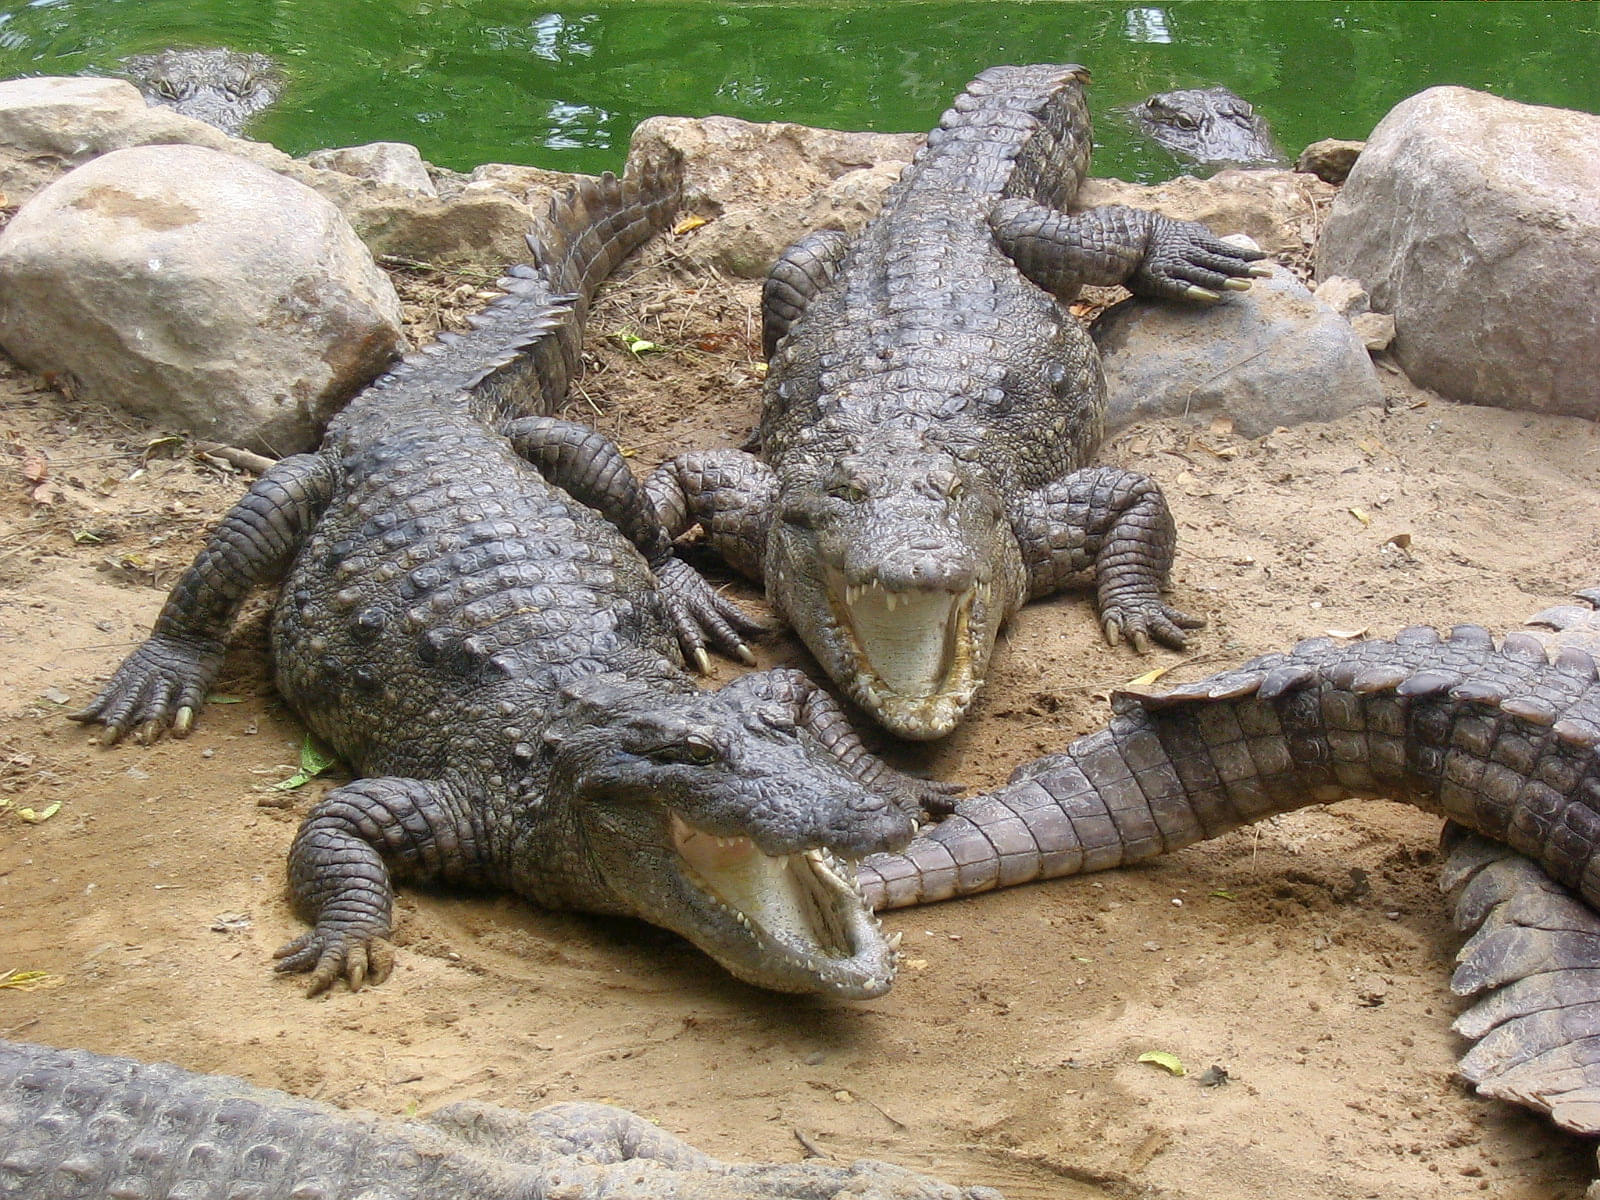 Battambang Crocodile Farm Overview